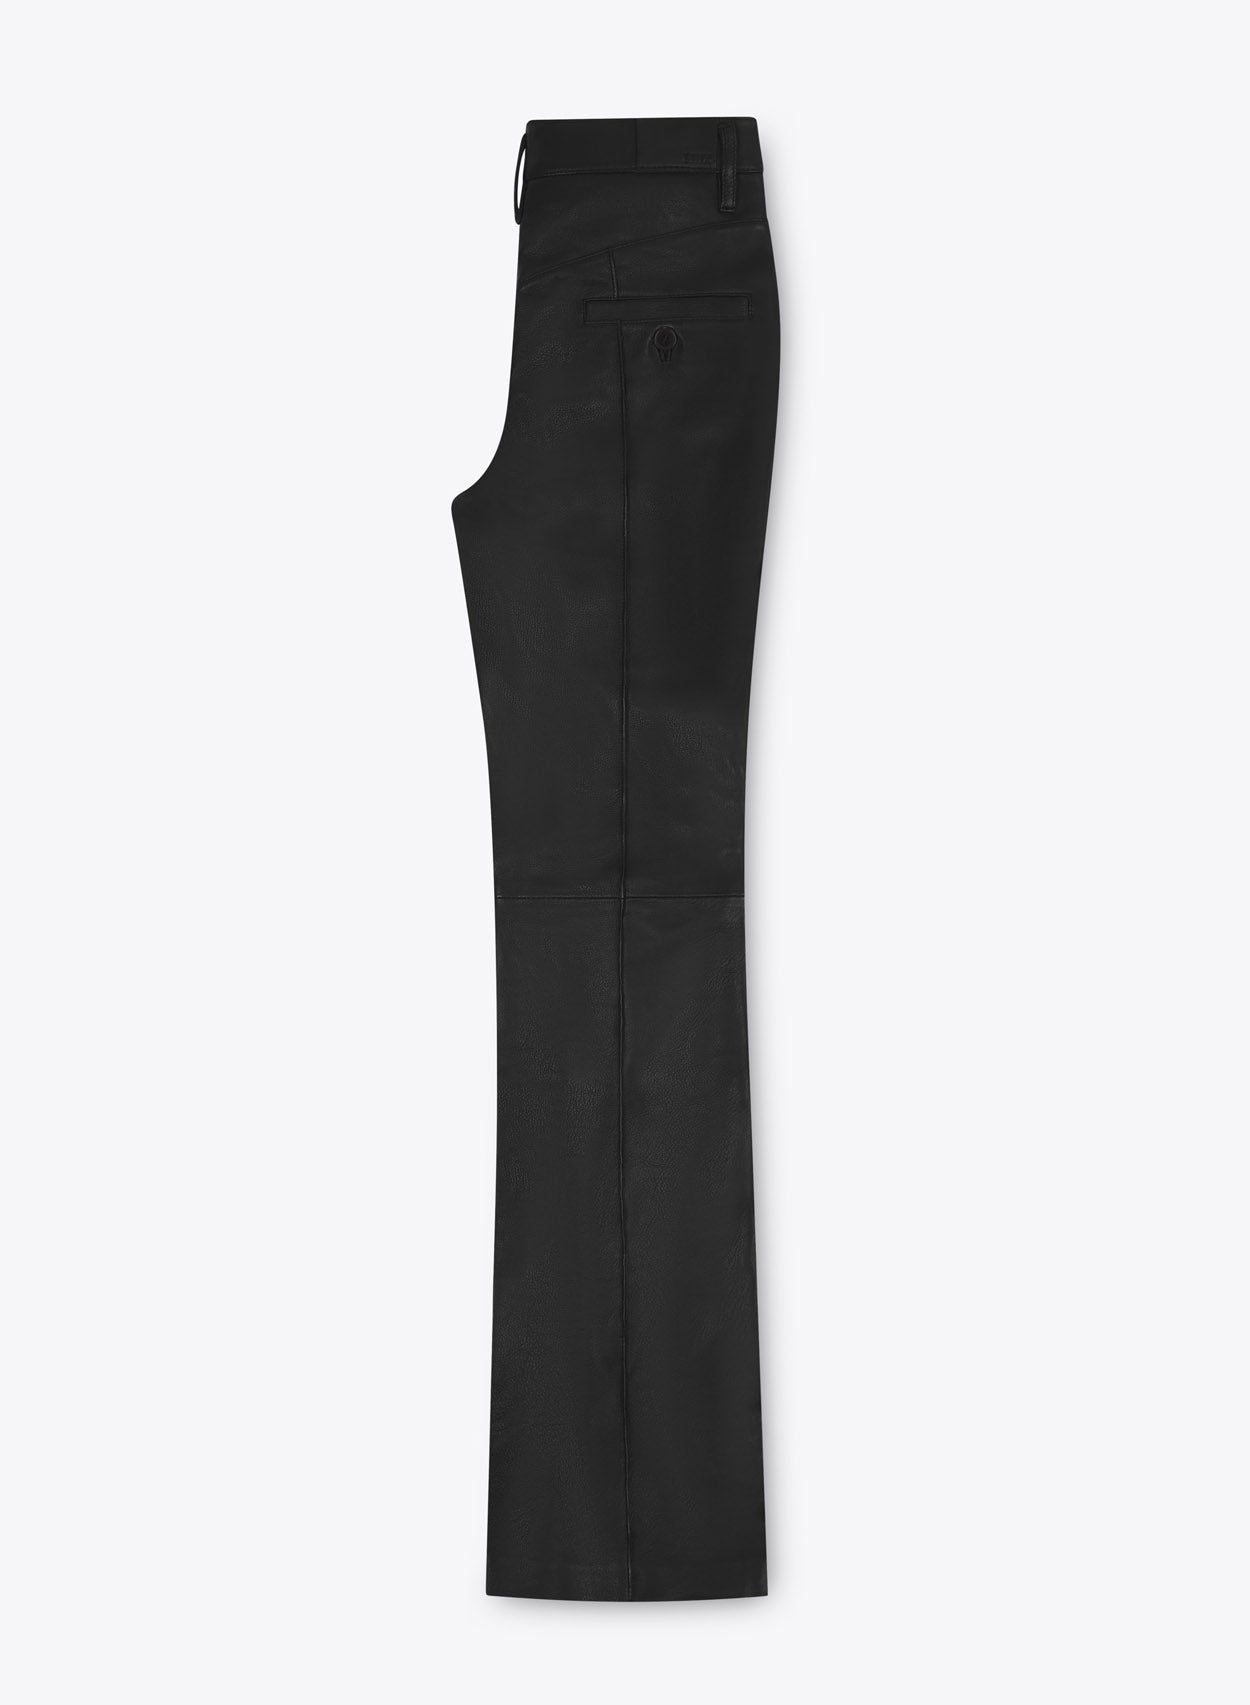 Medium Black Leather Pants Bootcut Urban Concept Bogattica Made in